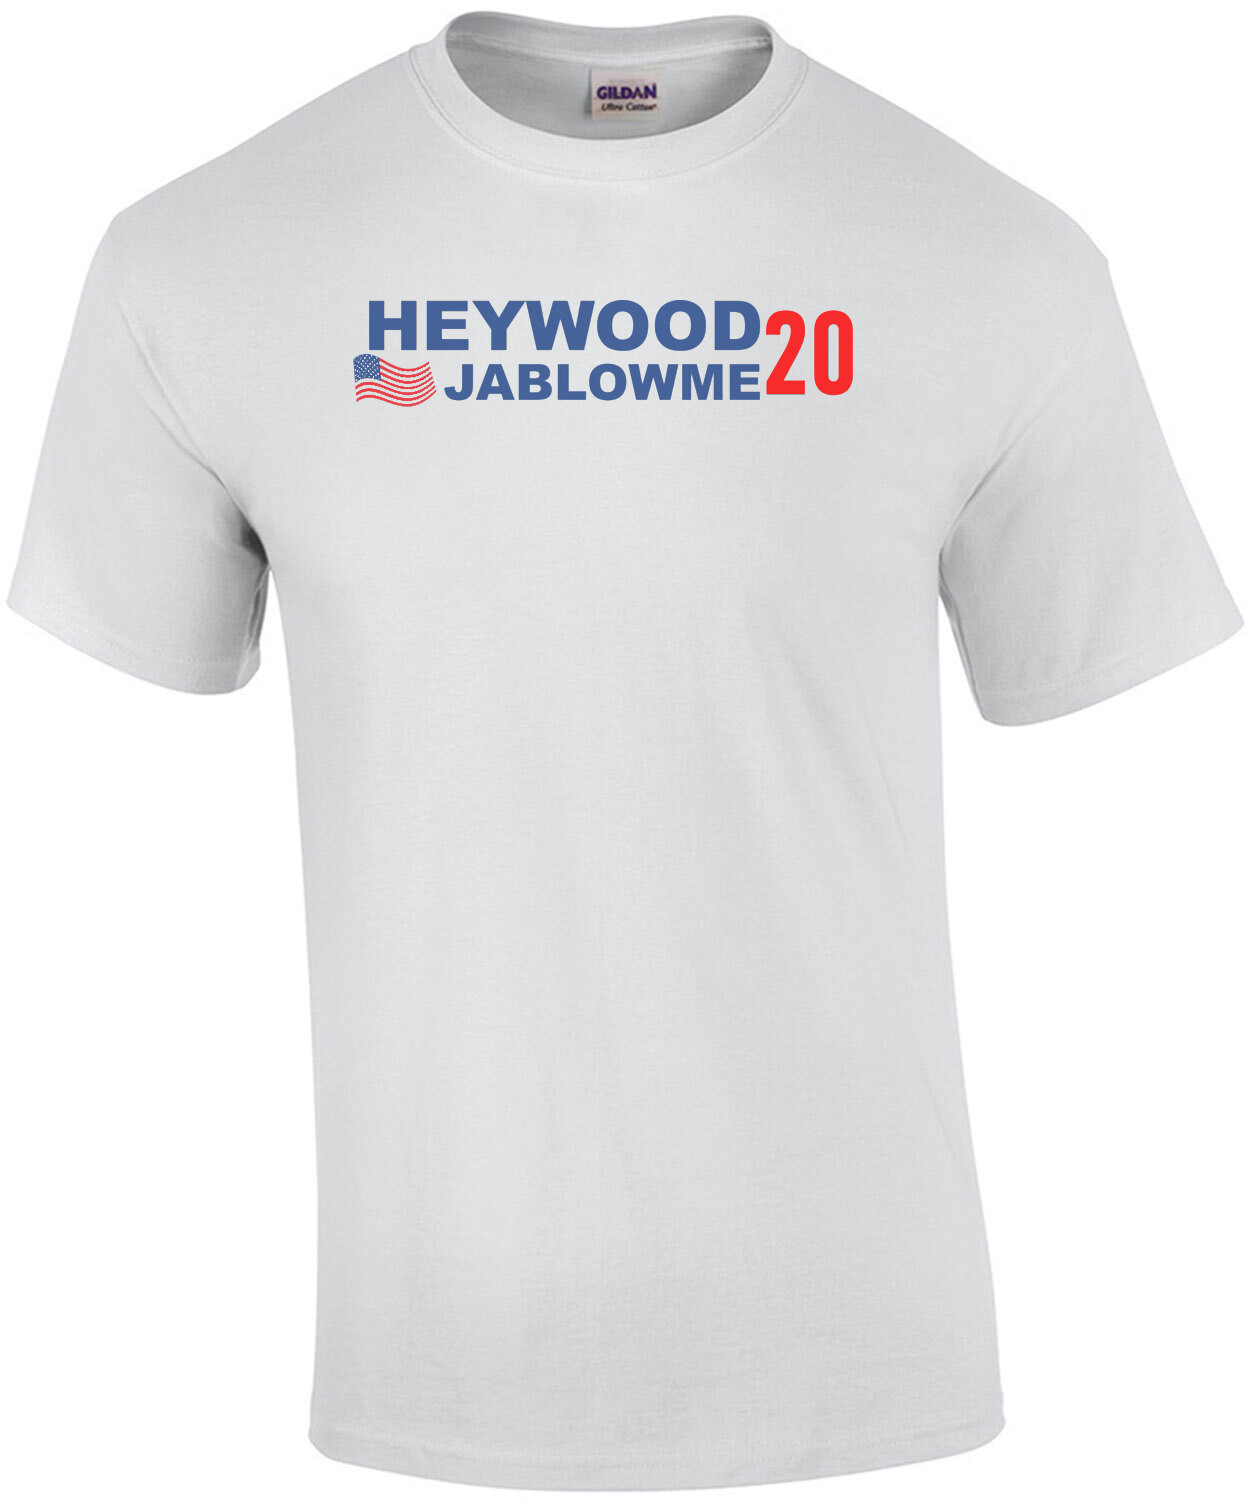 Heywood Jablowme 2020 - Funny Election T-Shirt